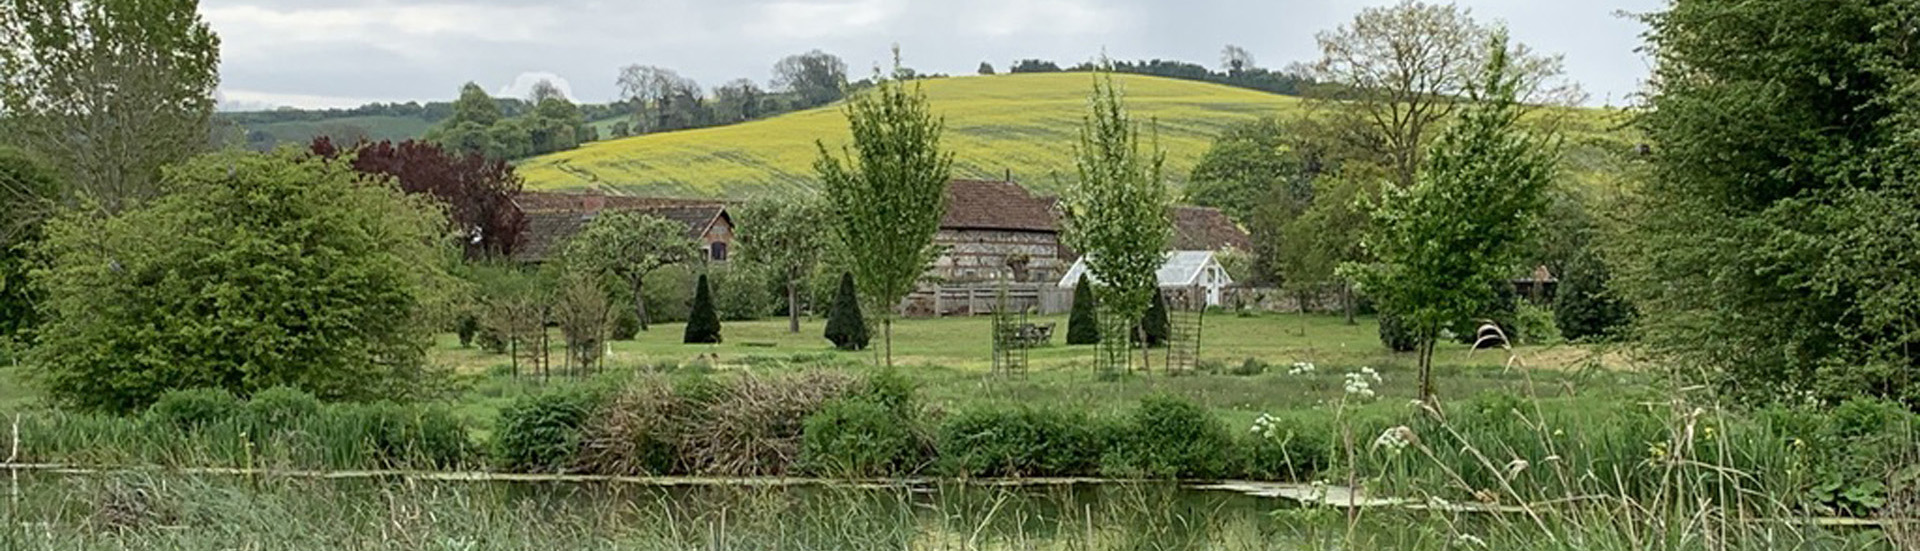 Croucheston Farm from across the River Ebble